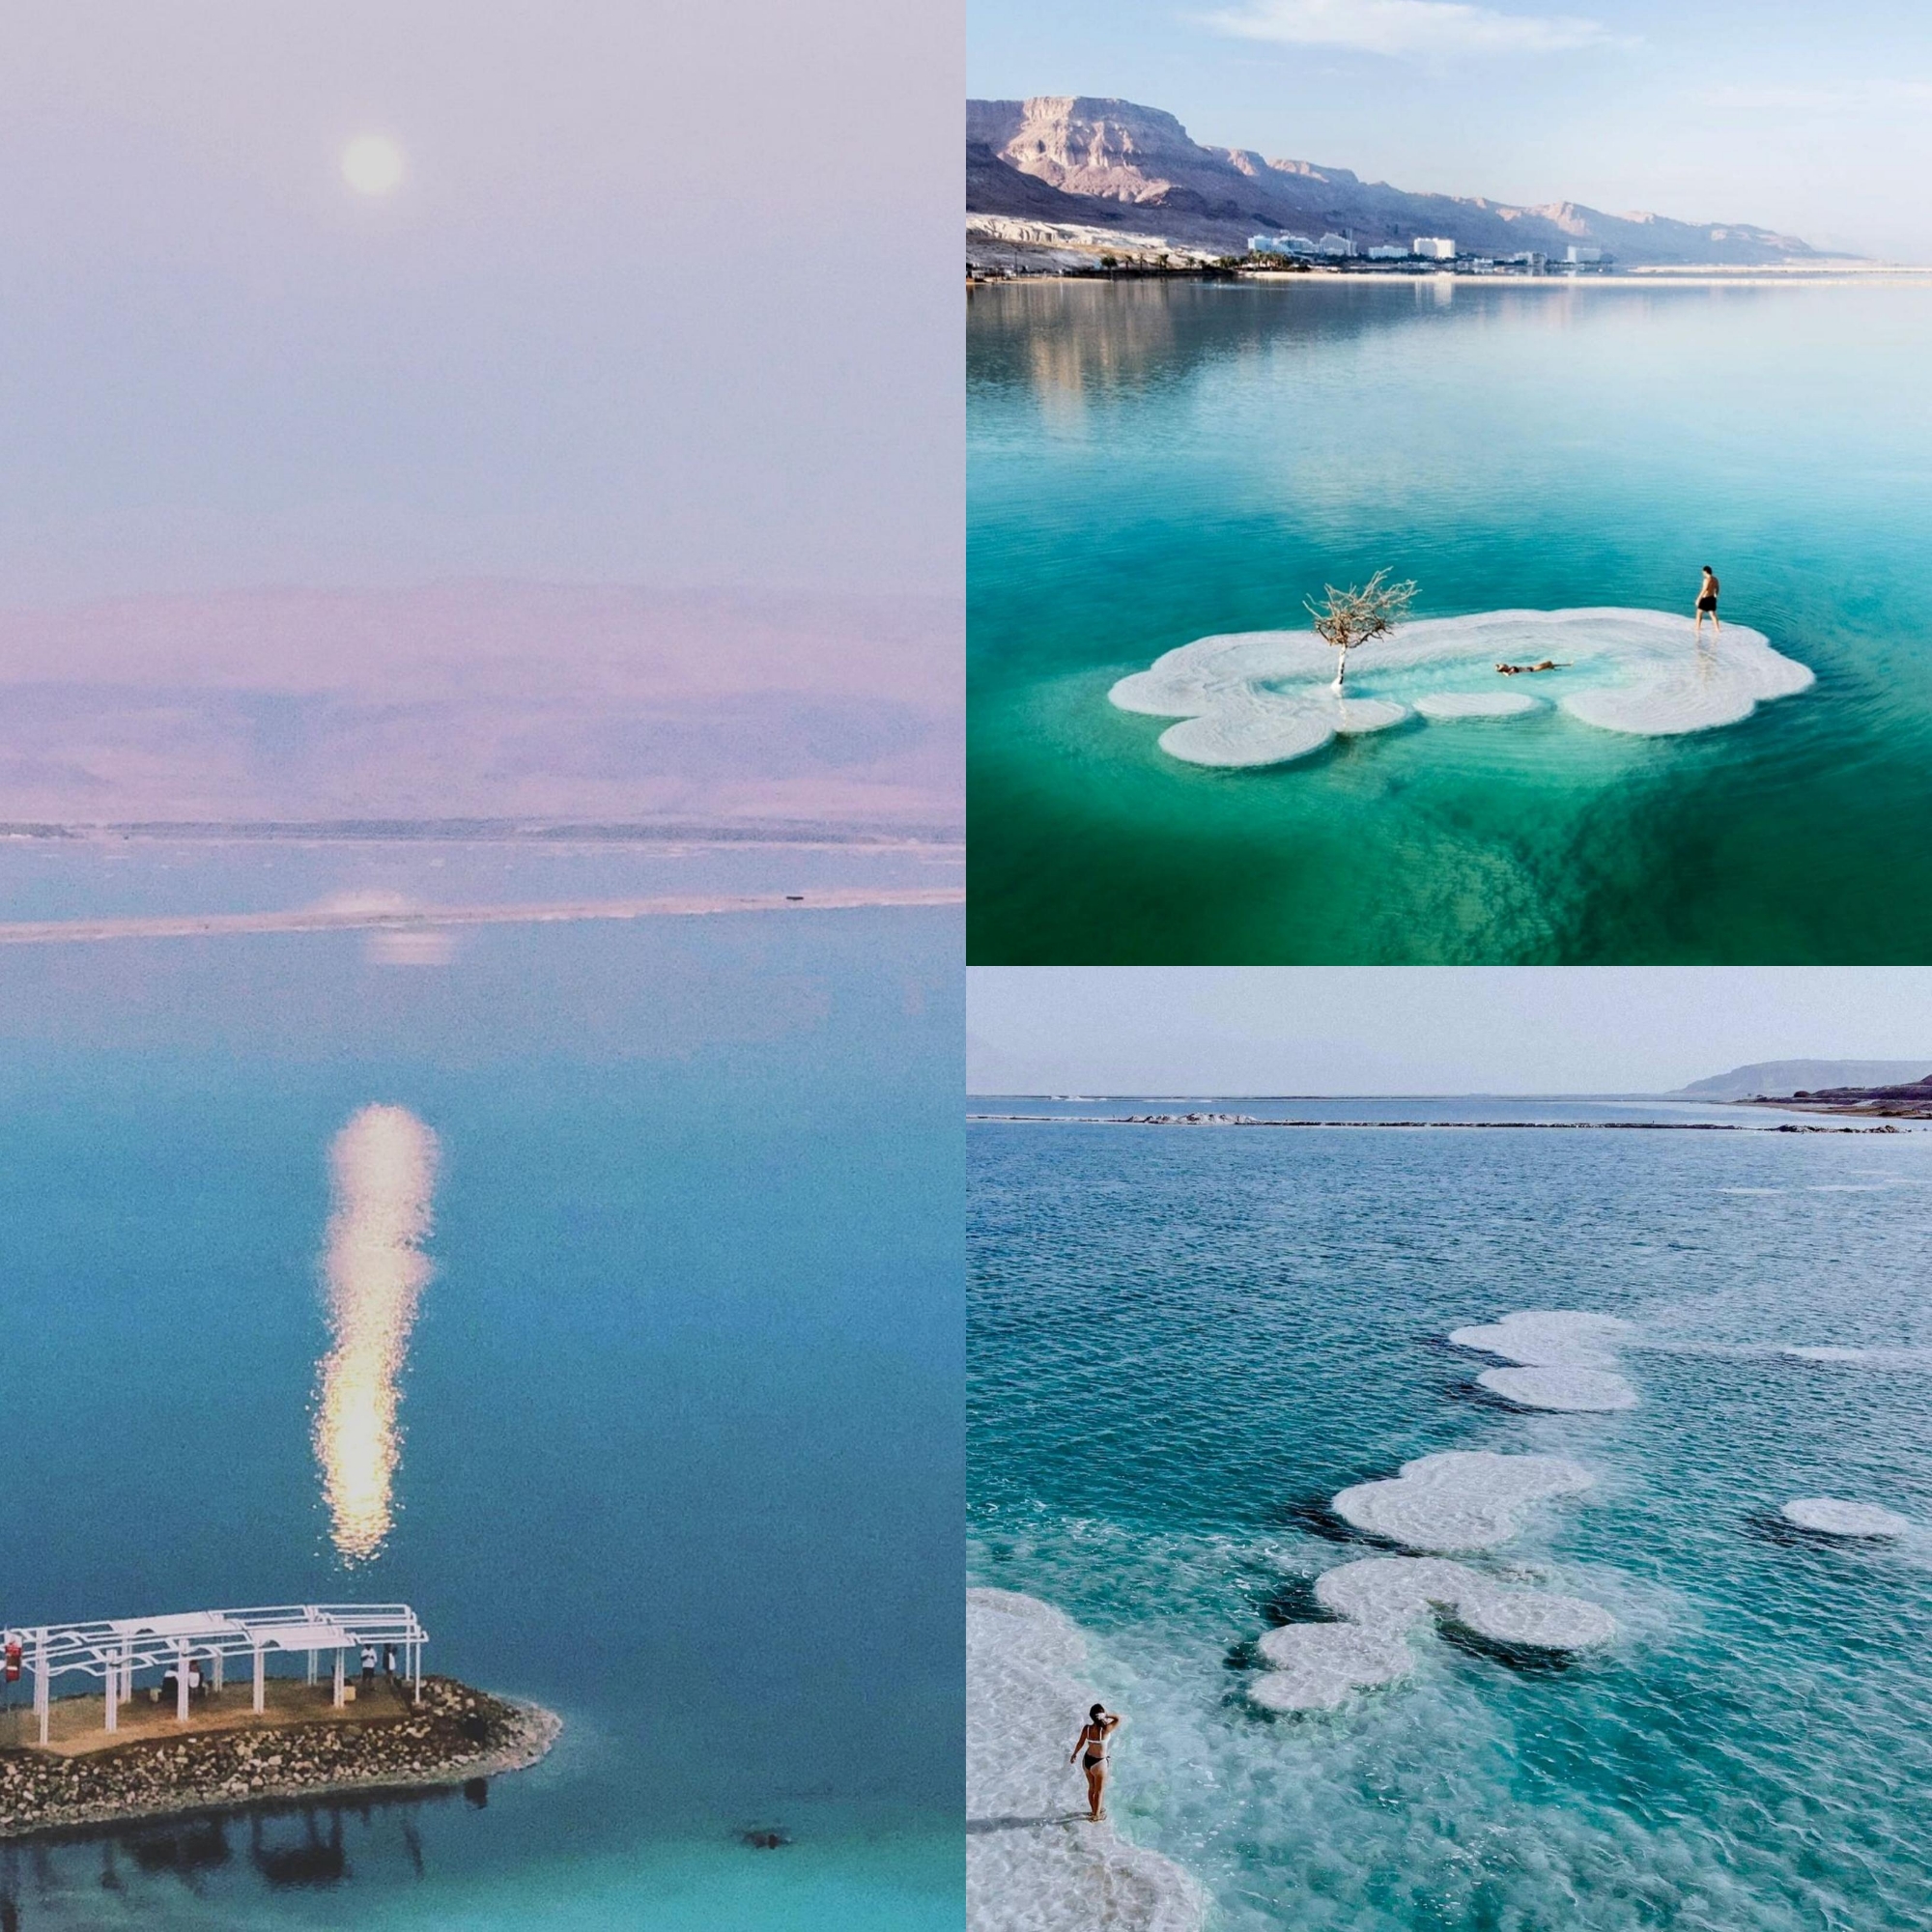 [Island][Island][Island]死海𝙏𝙝𝙚 𝘿𝙚𝙖𝙙 𝙎𝙚𝙖是以色列乃至全世界的著名